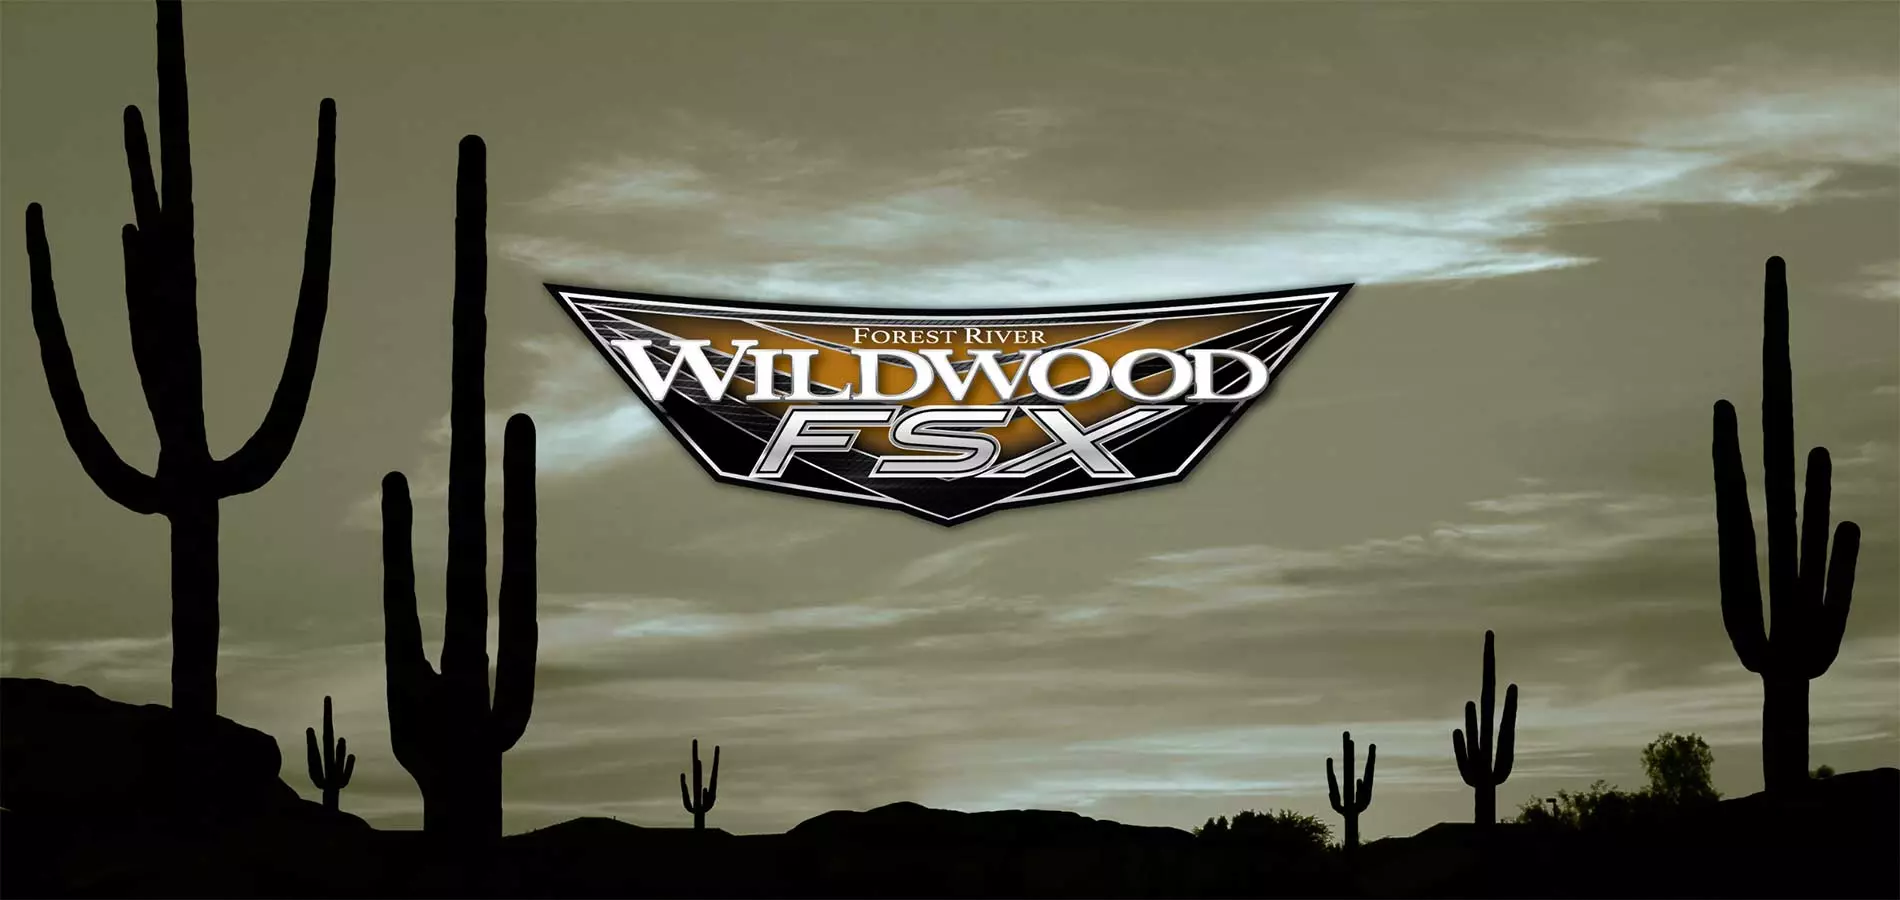 Wildwood FSX Southwest RVs